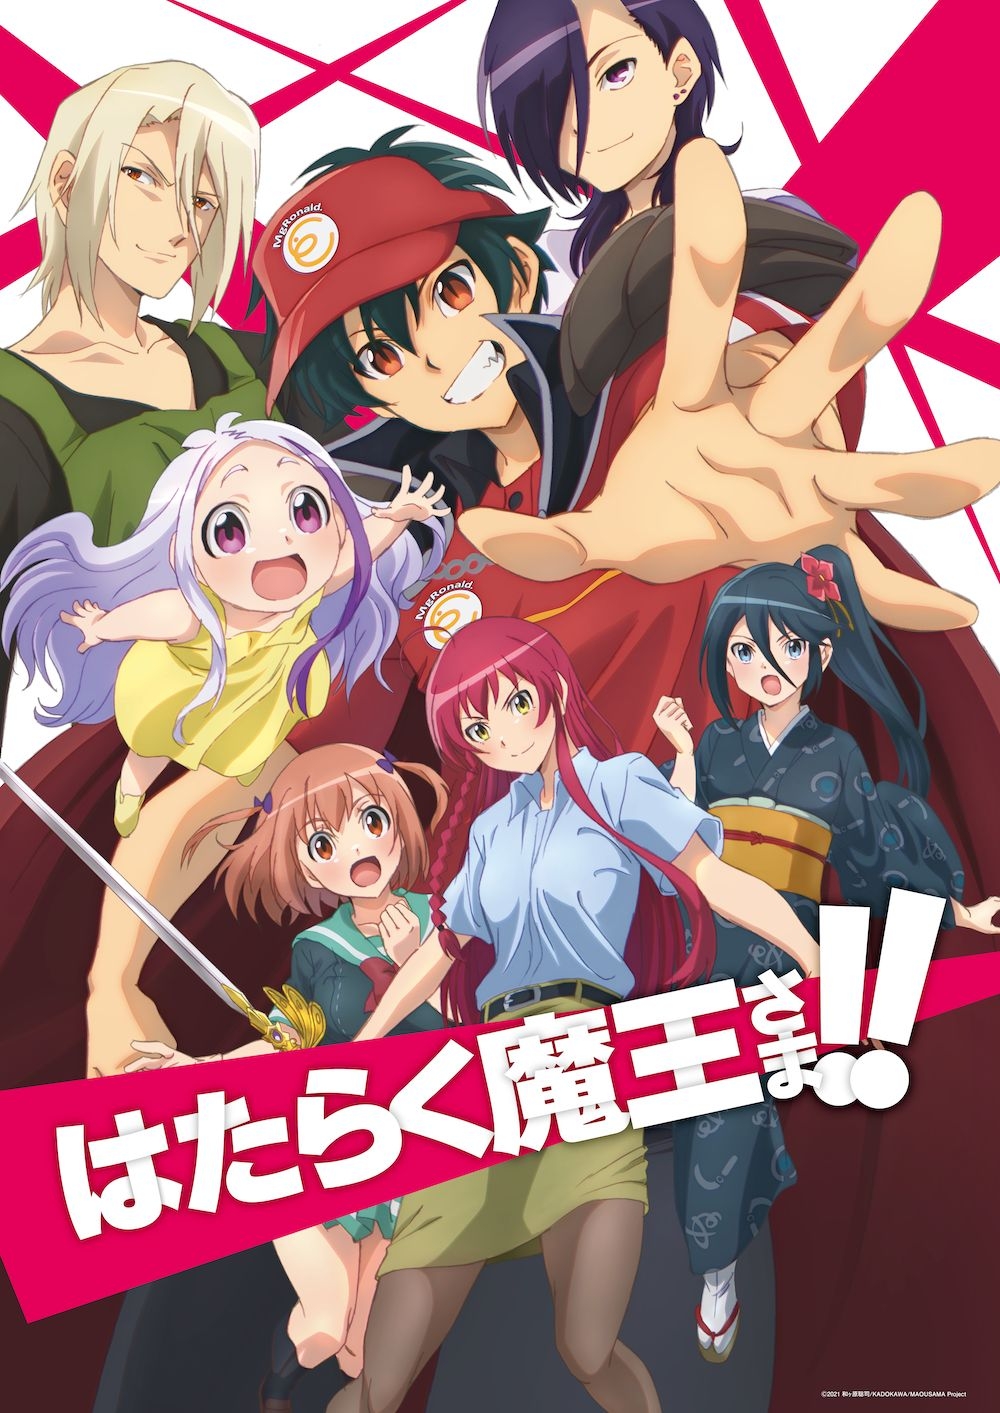 Orient Anime Poster Crunchyroll Expo 2022 Promo